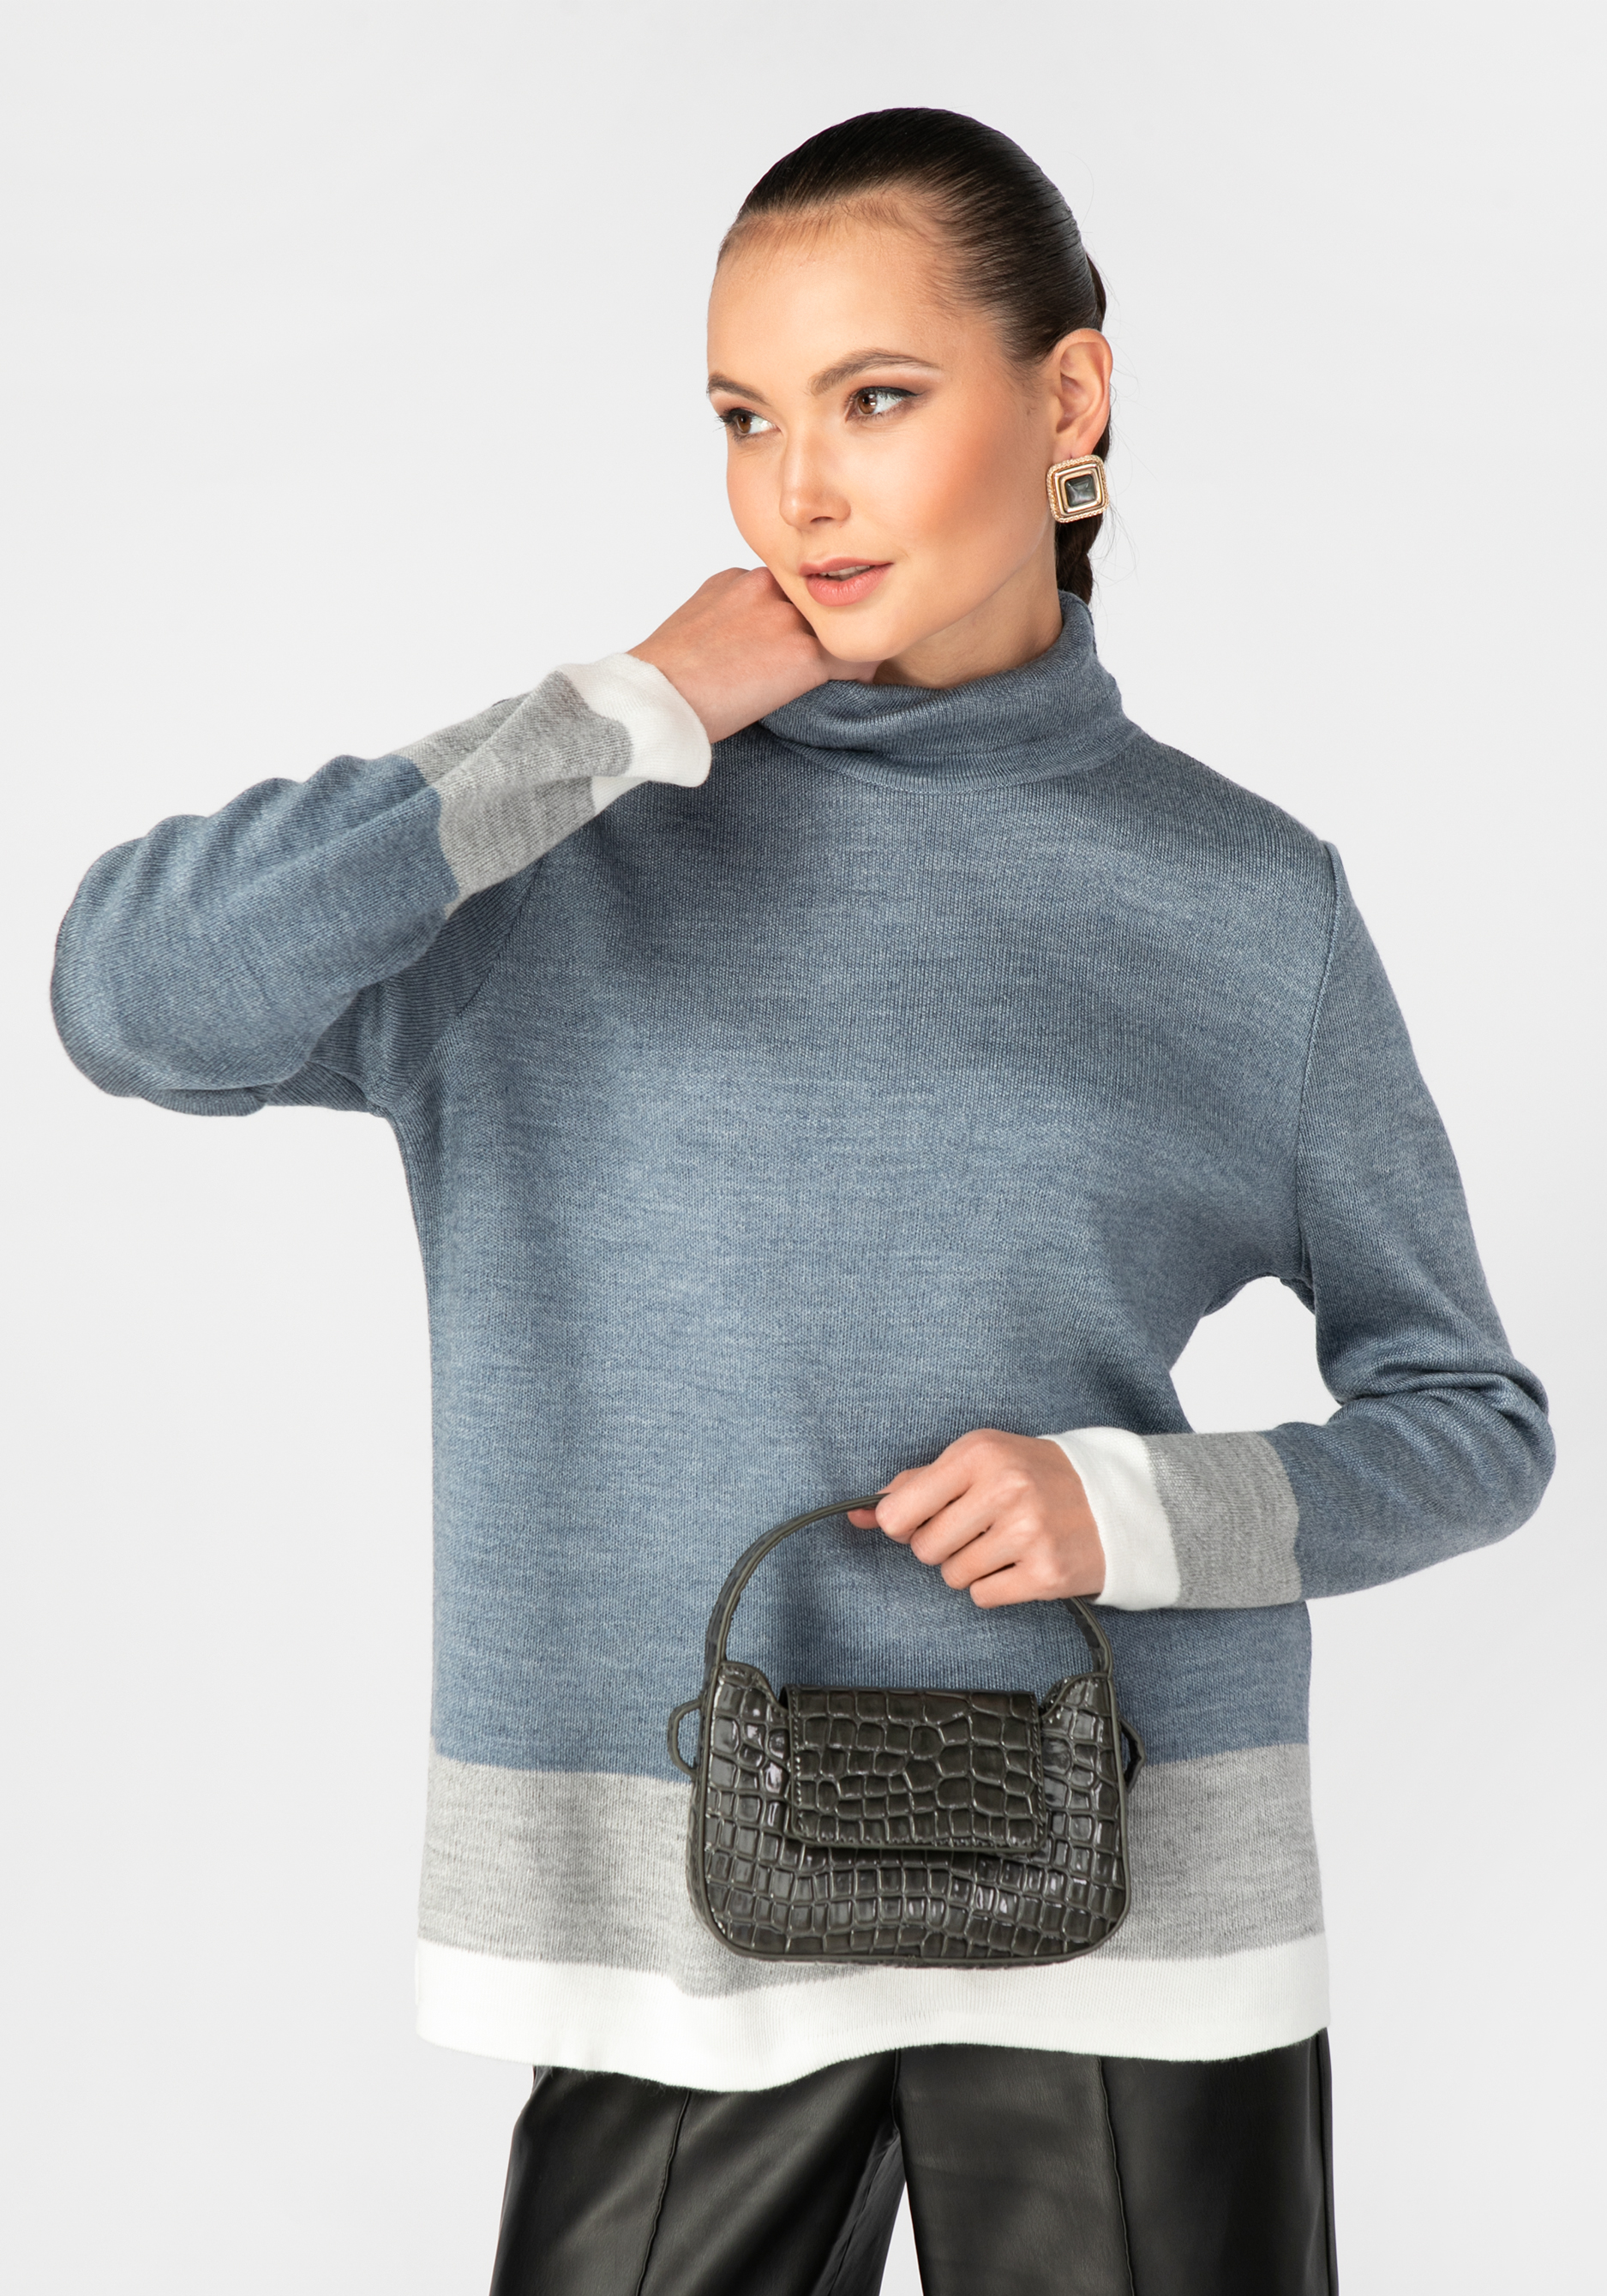 Свитер женский с контрастными полосами свитер женский с контрастными полосами